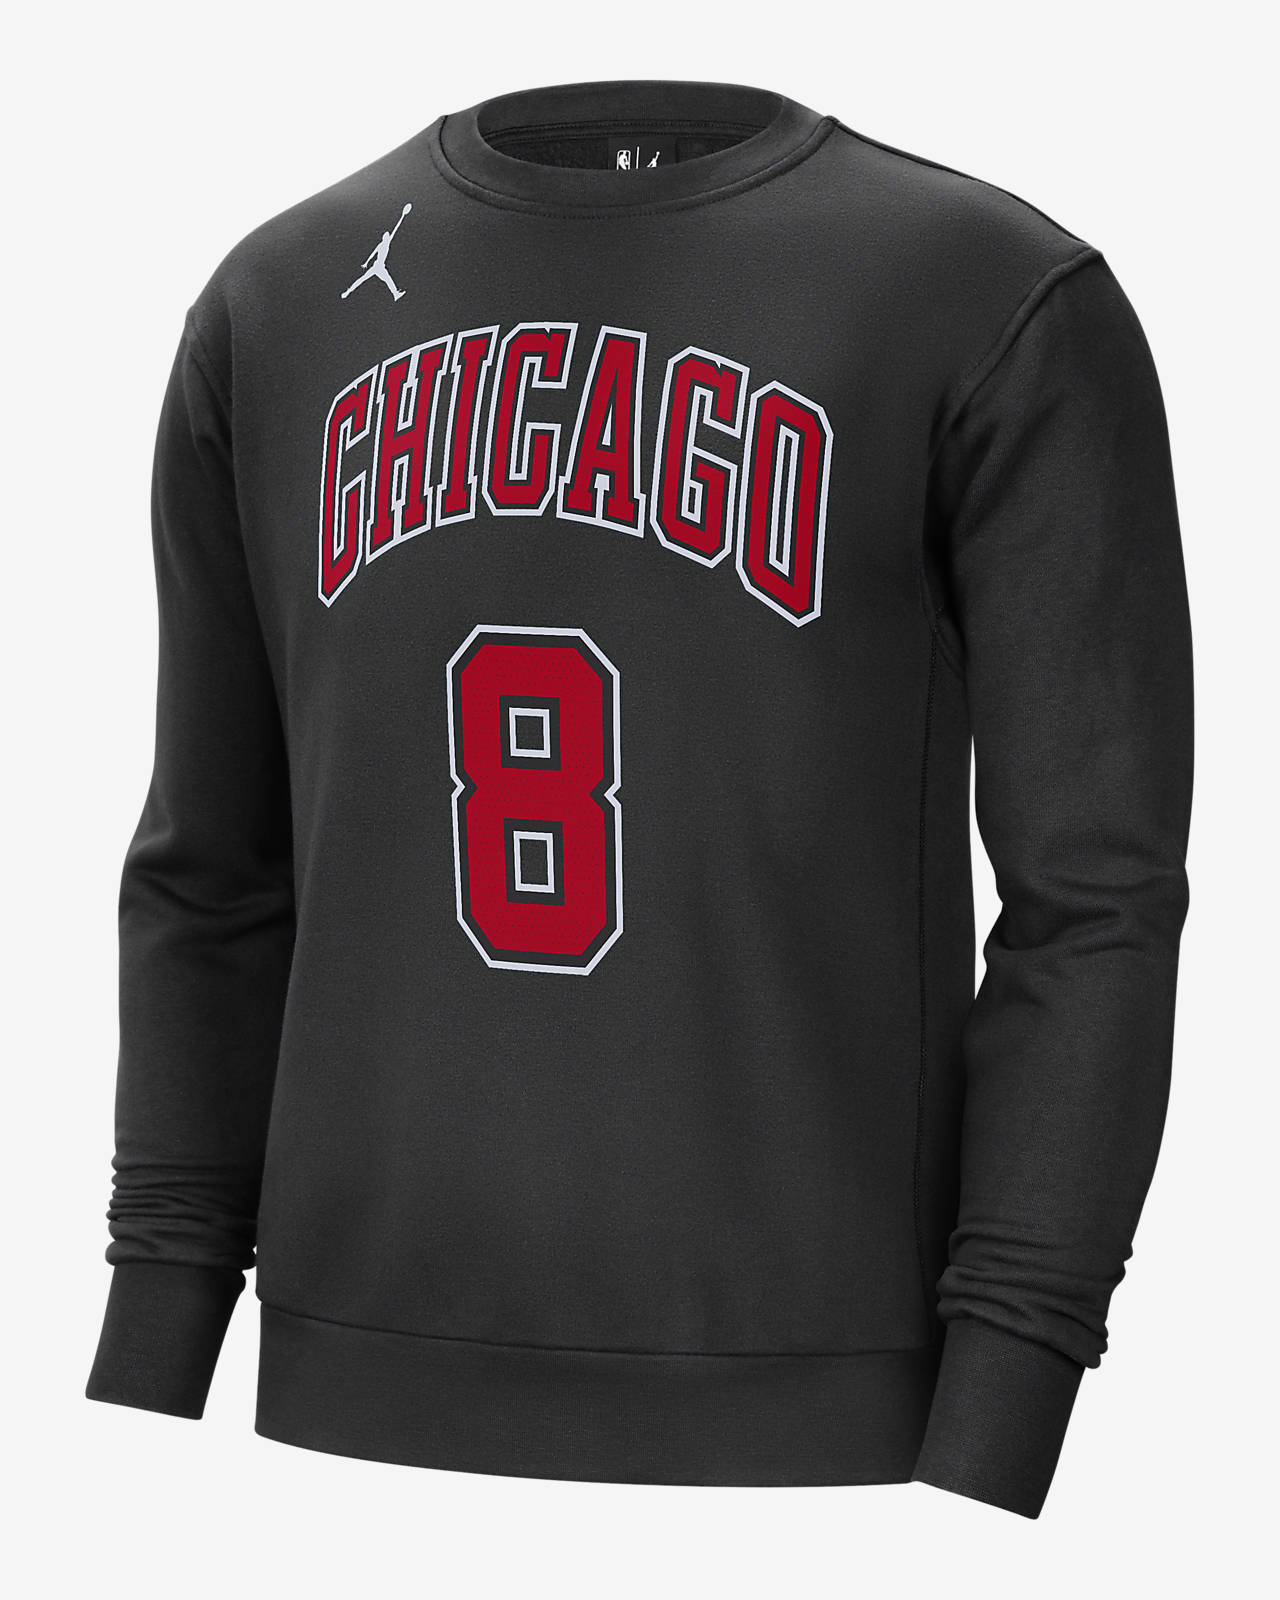 Shop Chicago Bulls Courtside Statement Edition Men's Jordan Max90